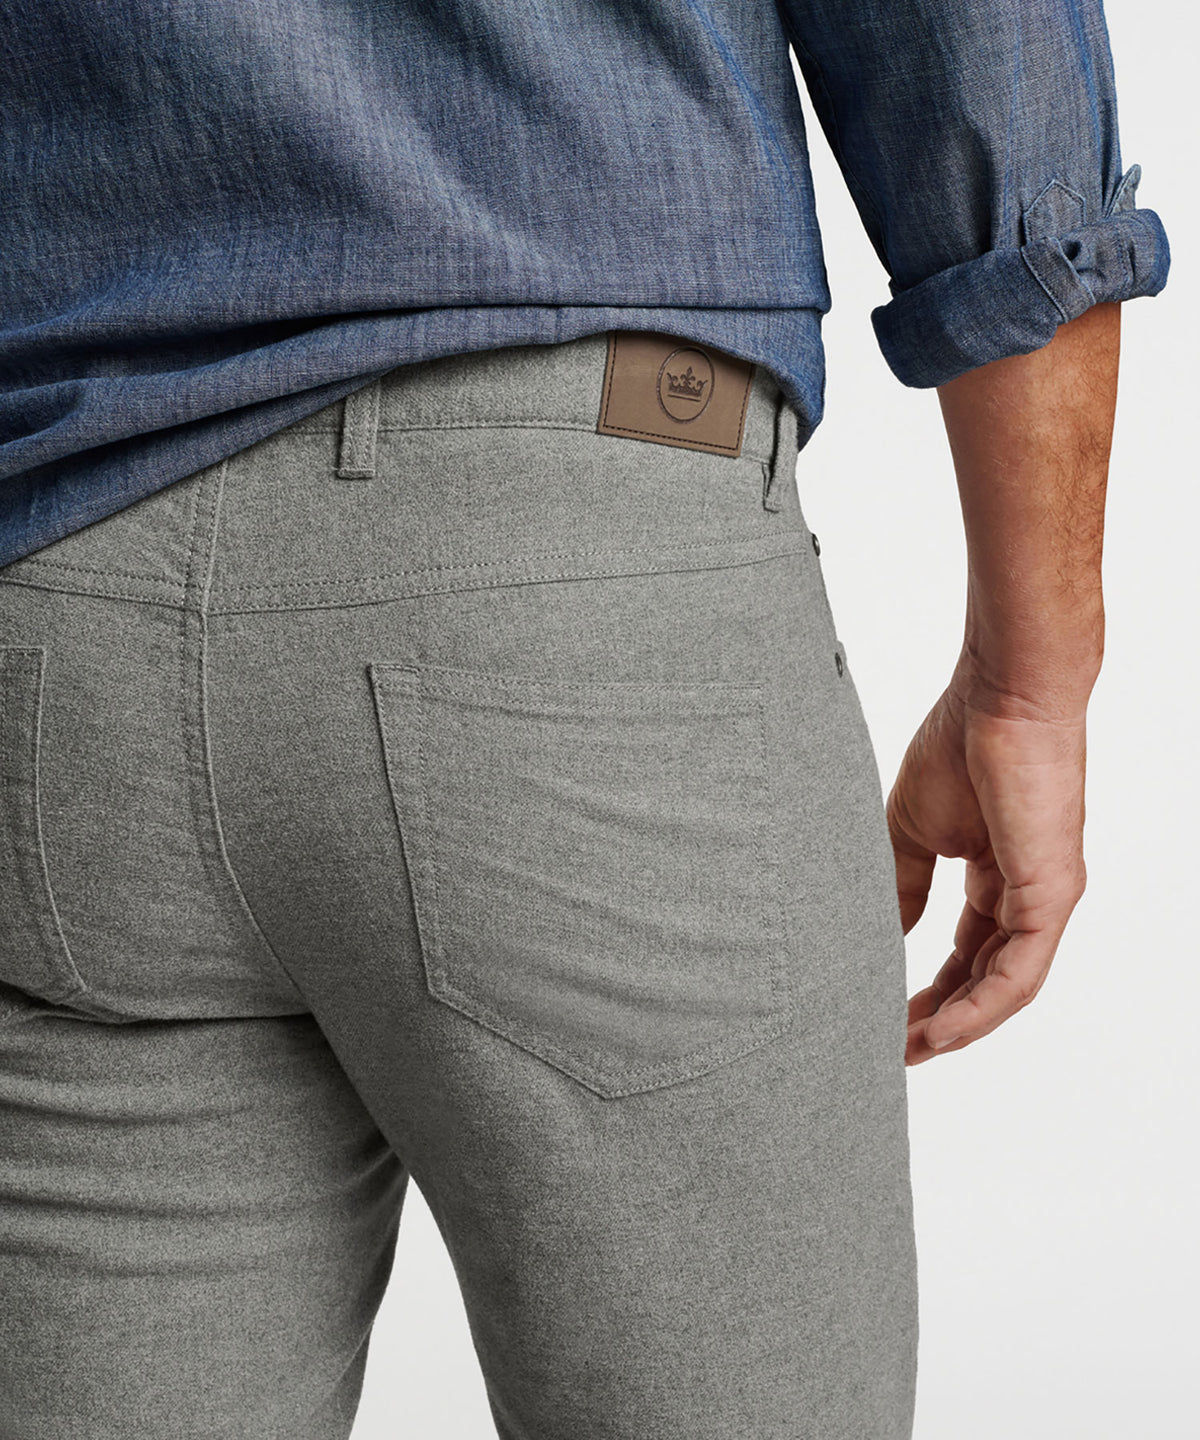 Peter Millar Mountainside Flannel 5 Pocket Pant, Men's Big & Tall